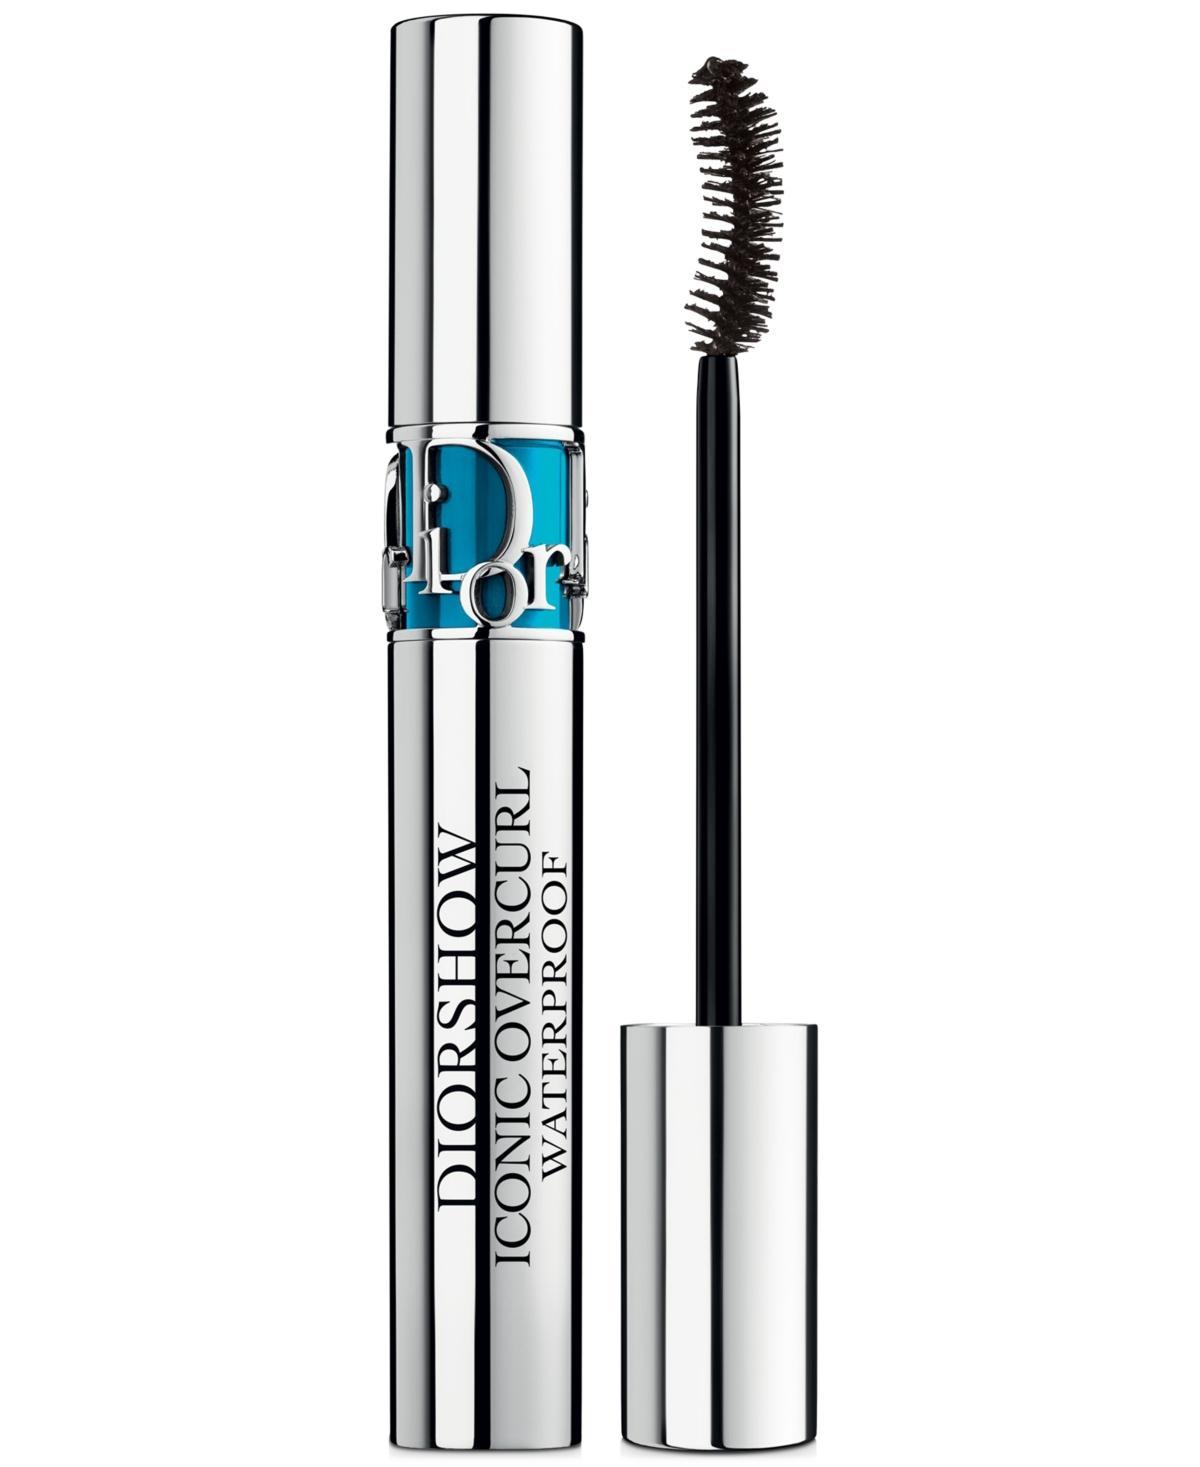 Diorshow Iconic Overcurl Waterproof Mascara Product Image